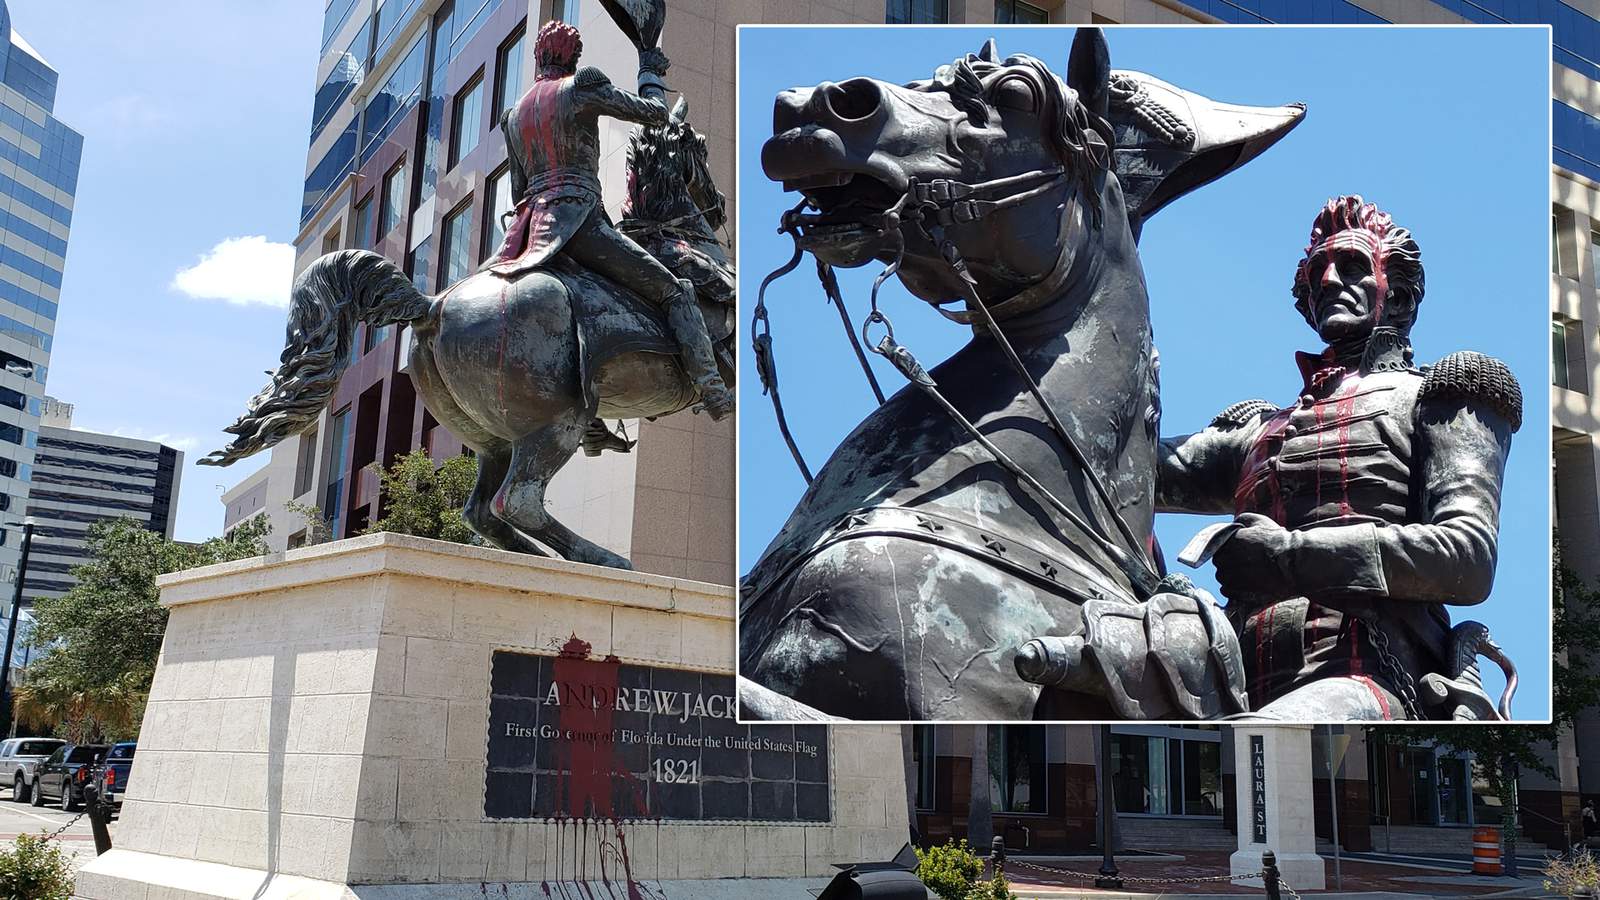 Man arrested, accused of vandalizing Andew Jackson statue